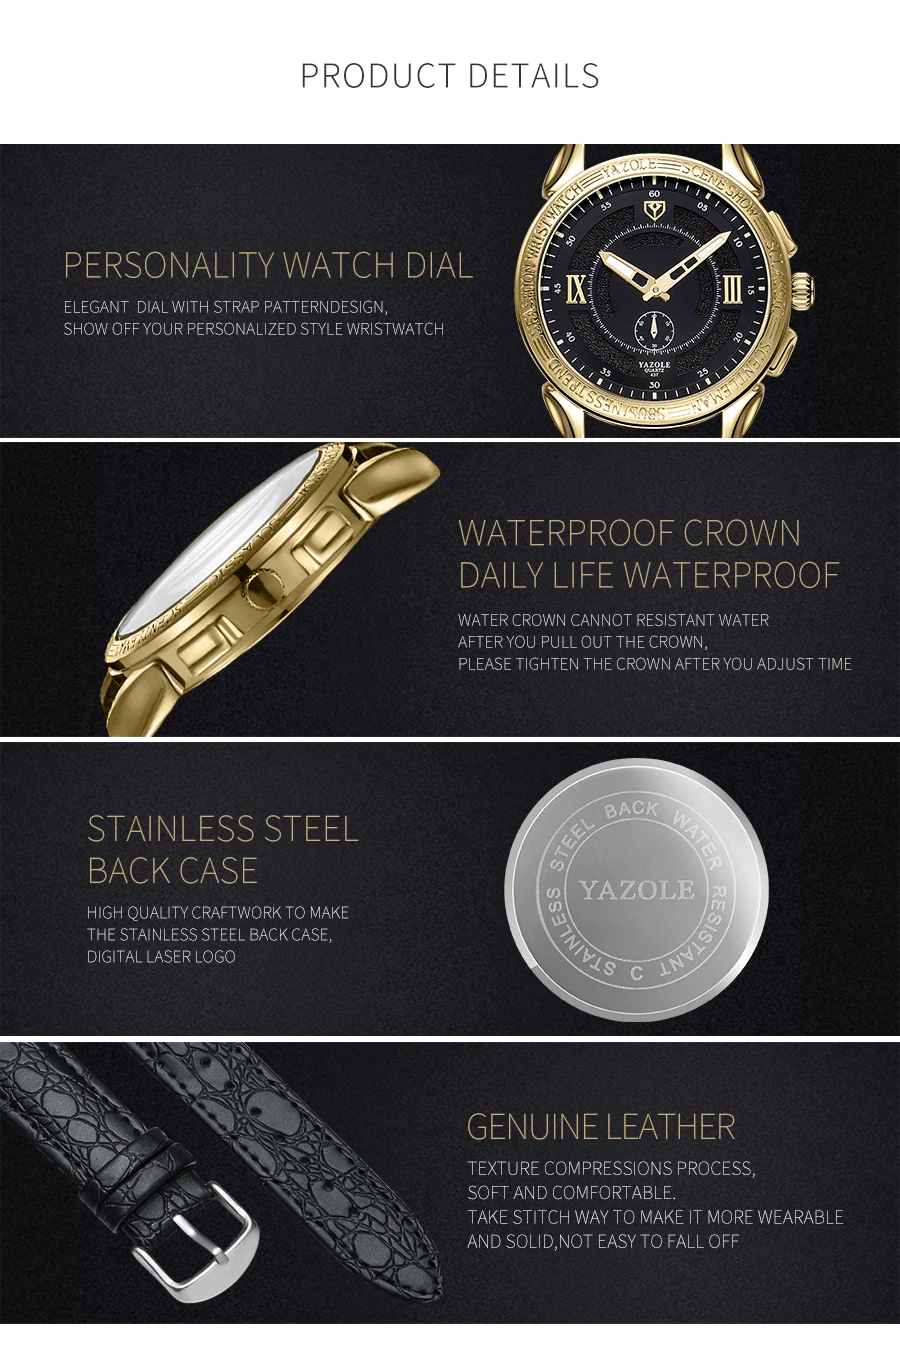 Fashion YAZOLE 437 Leather Mens Analog Quarts Watches Blue Ray Men Wrist Watch Top Brand Luxury Casual Watch Clock